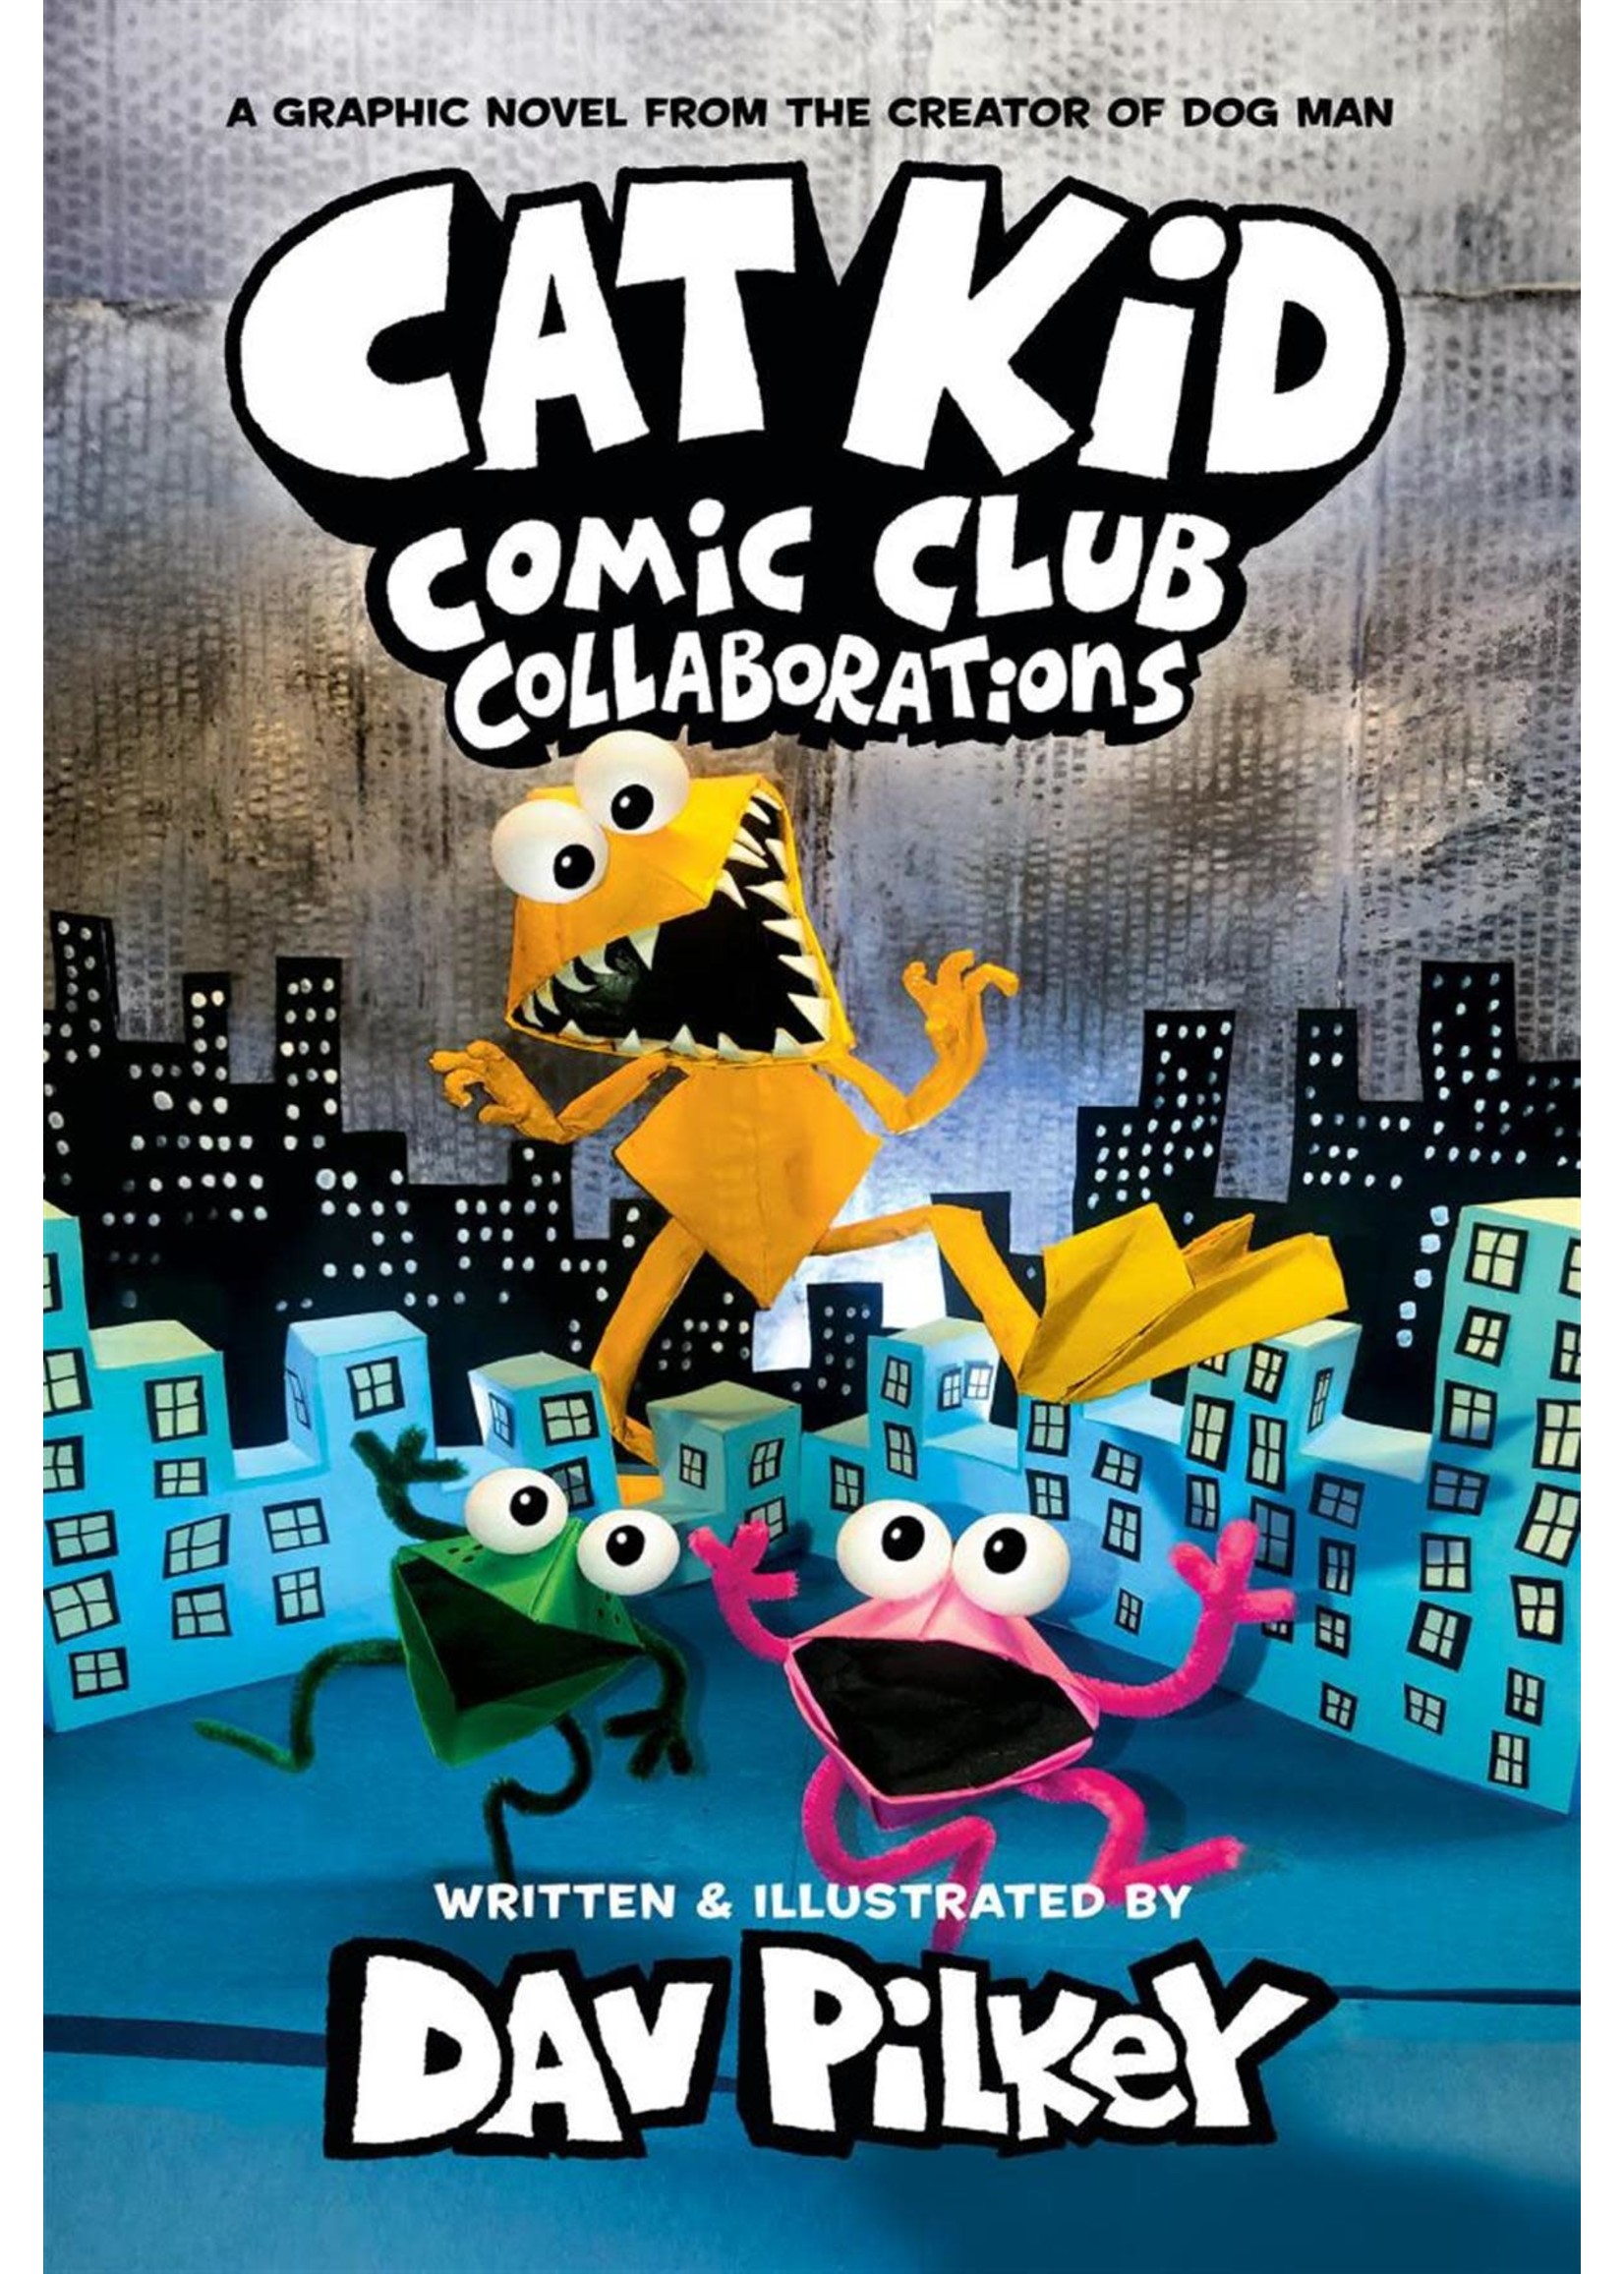 Cat Kid Comic Club: Collaborations (Cat Kid Comic Club #4) by Dav Pilkey